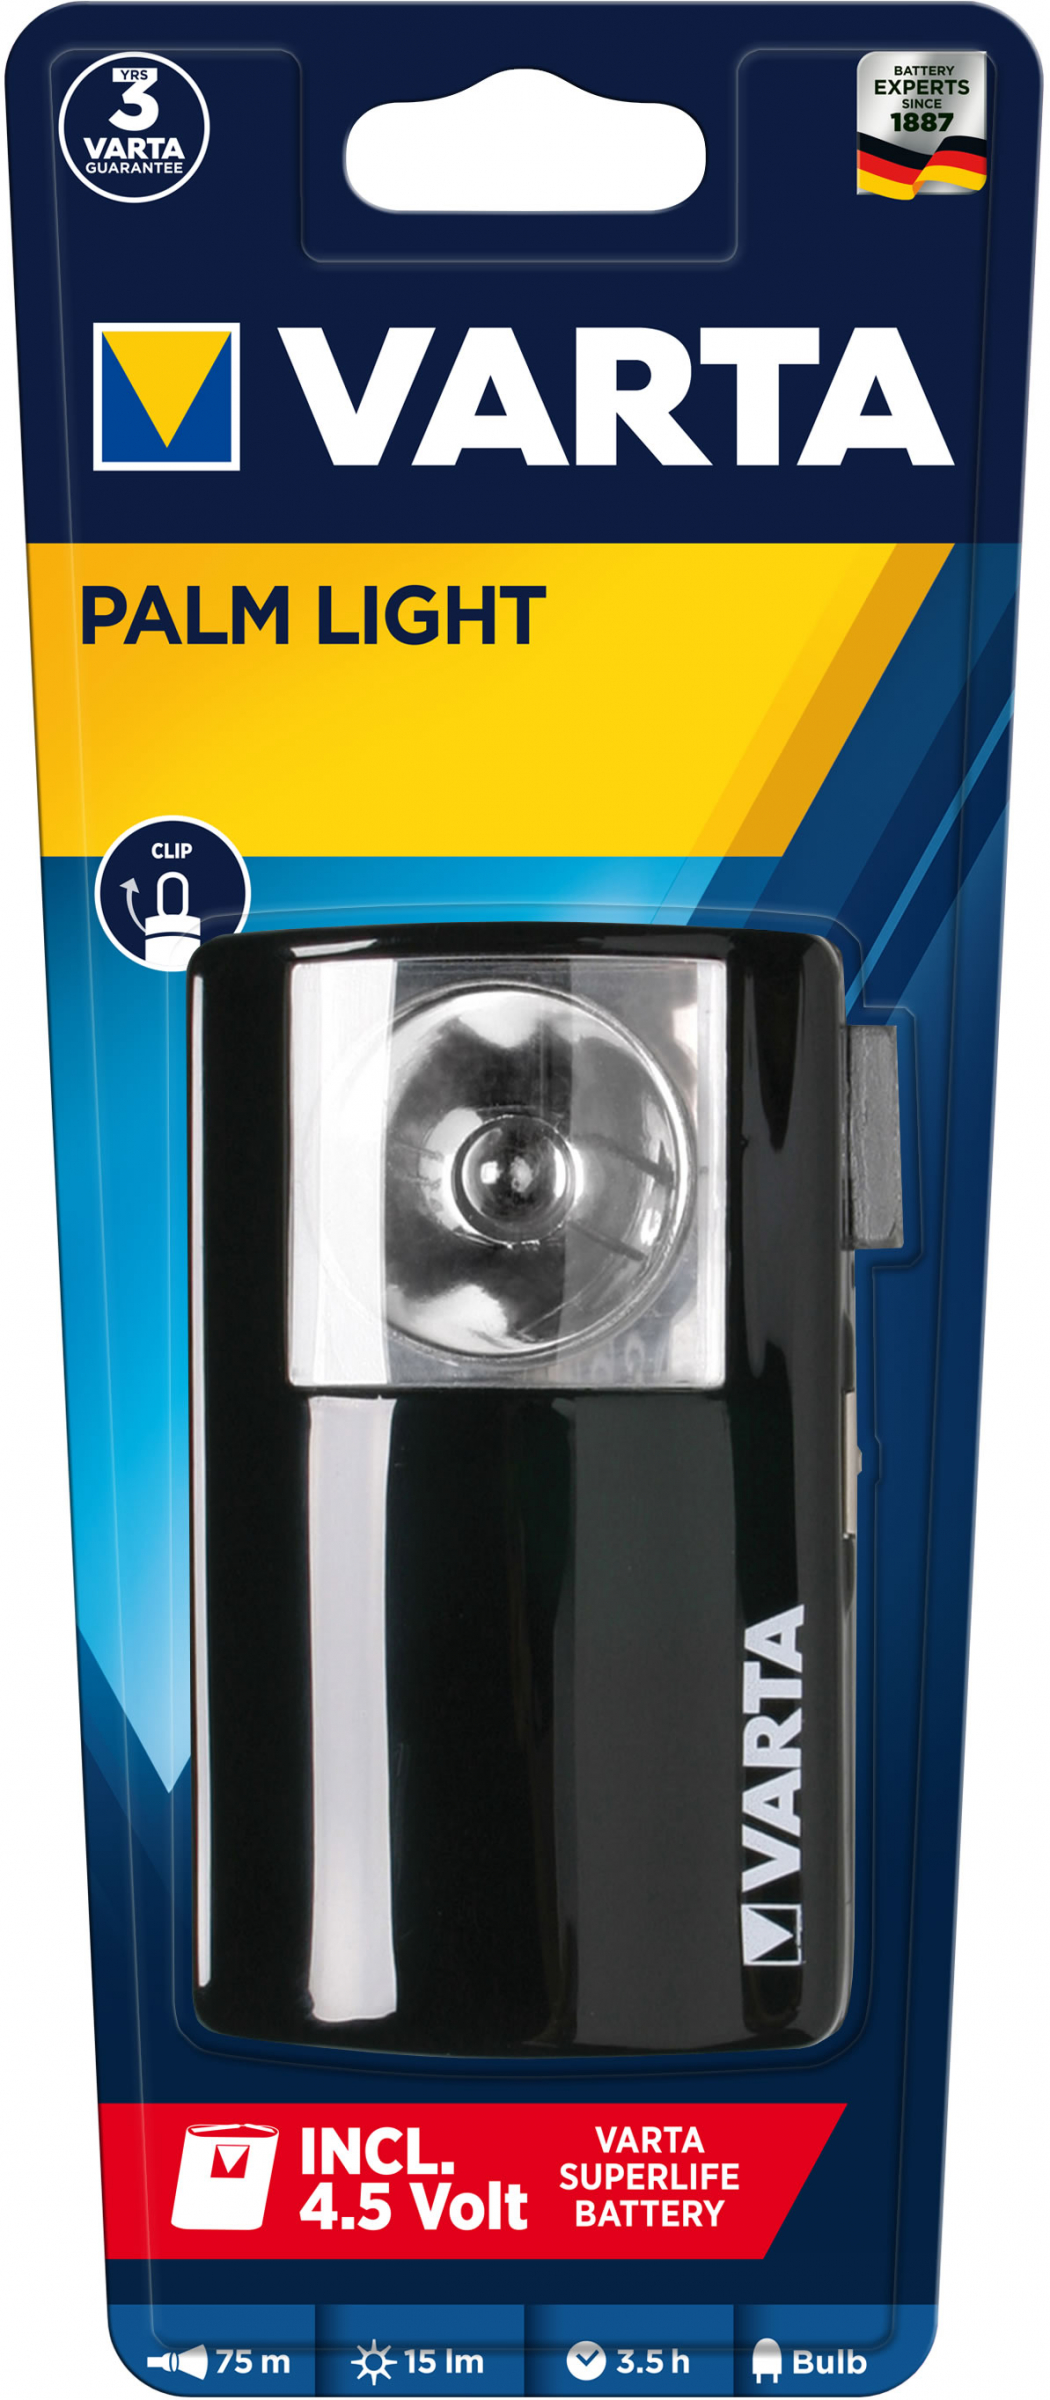 Varta Palm Light Flachleuchte 3R12 inkl. Batterie